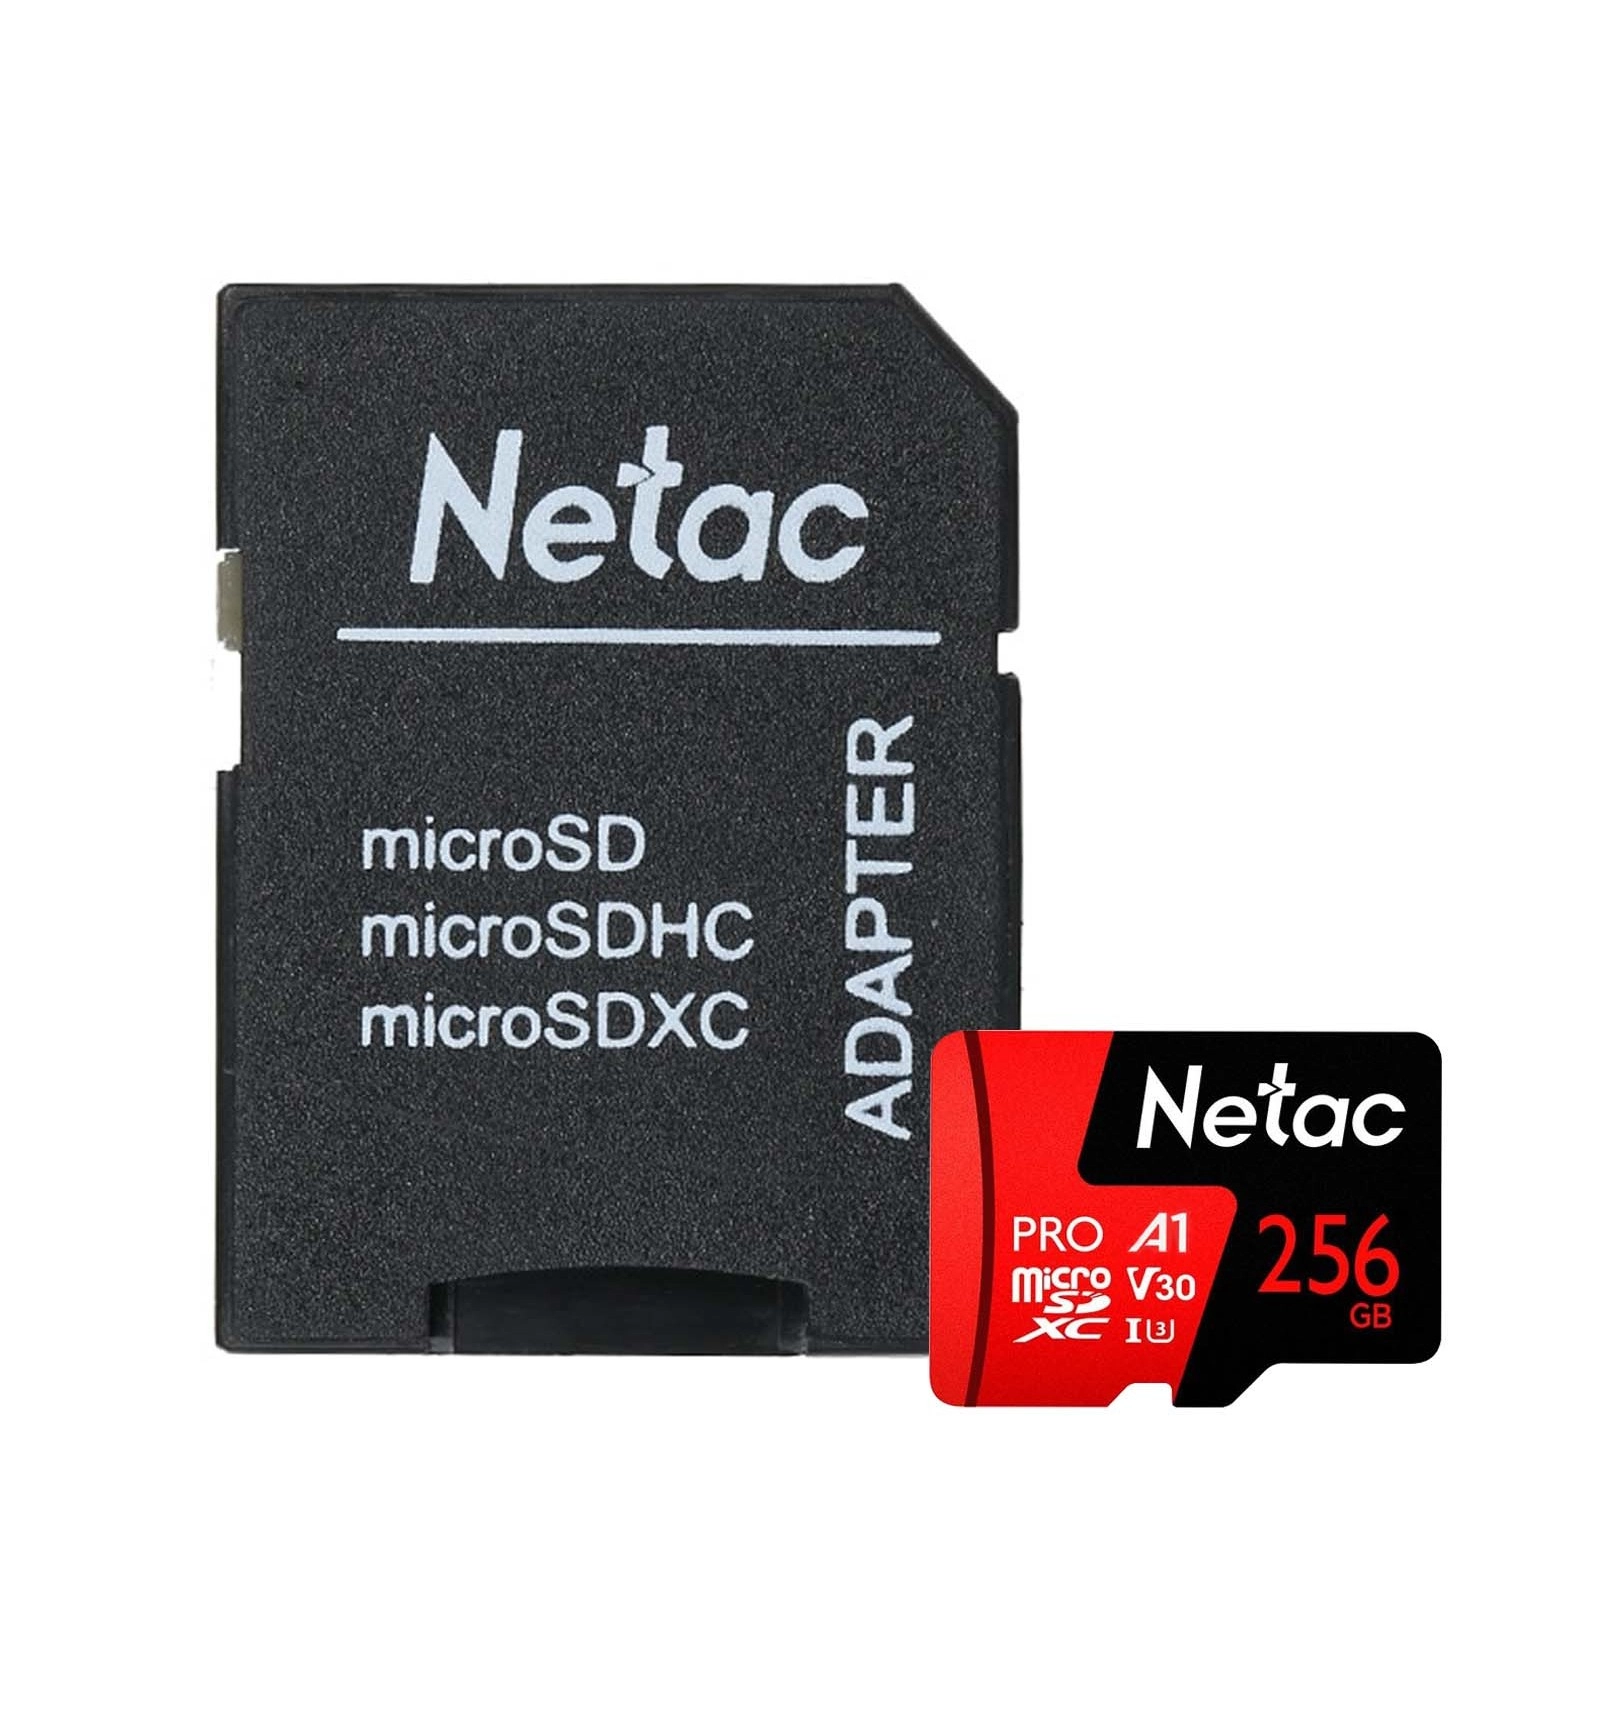 Netac P500 Extreme Pro 256GB V30 UHS-I Micro SDXC Card w/ Adapter